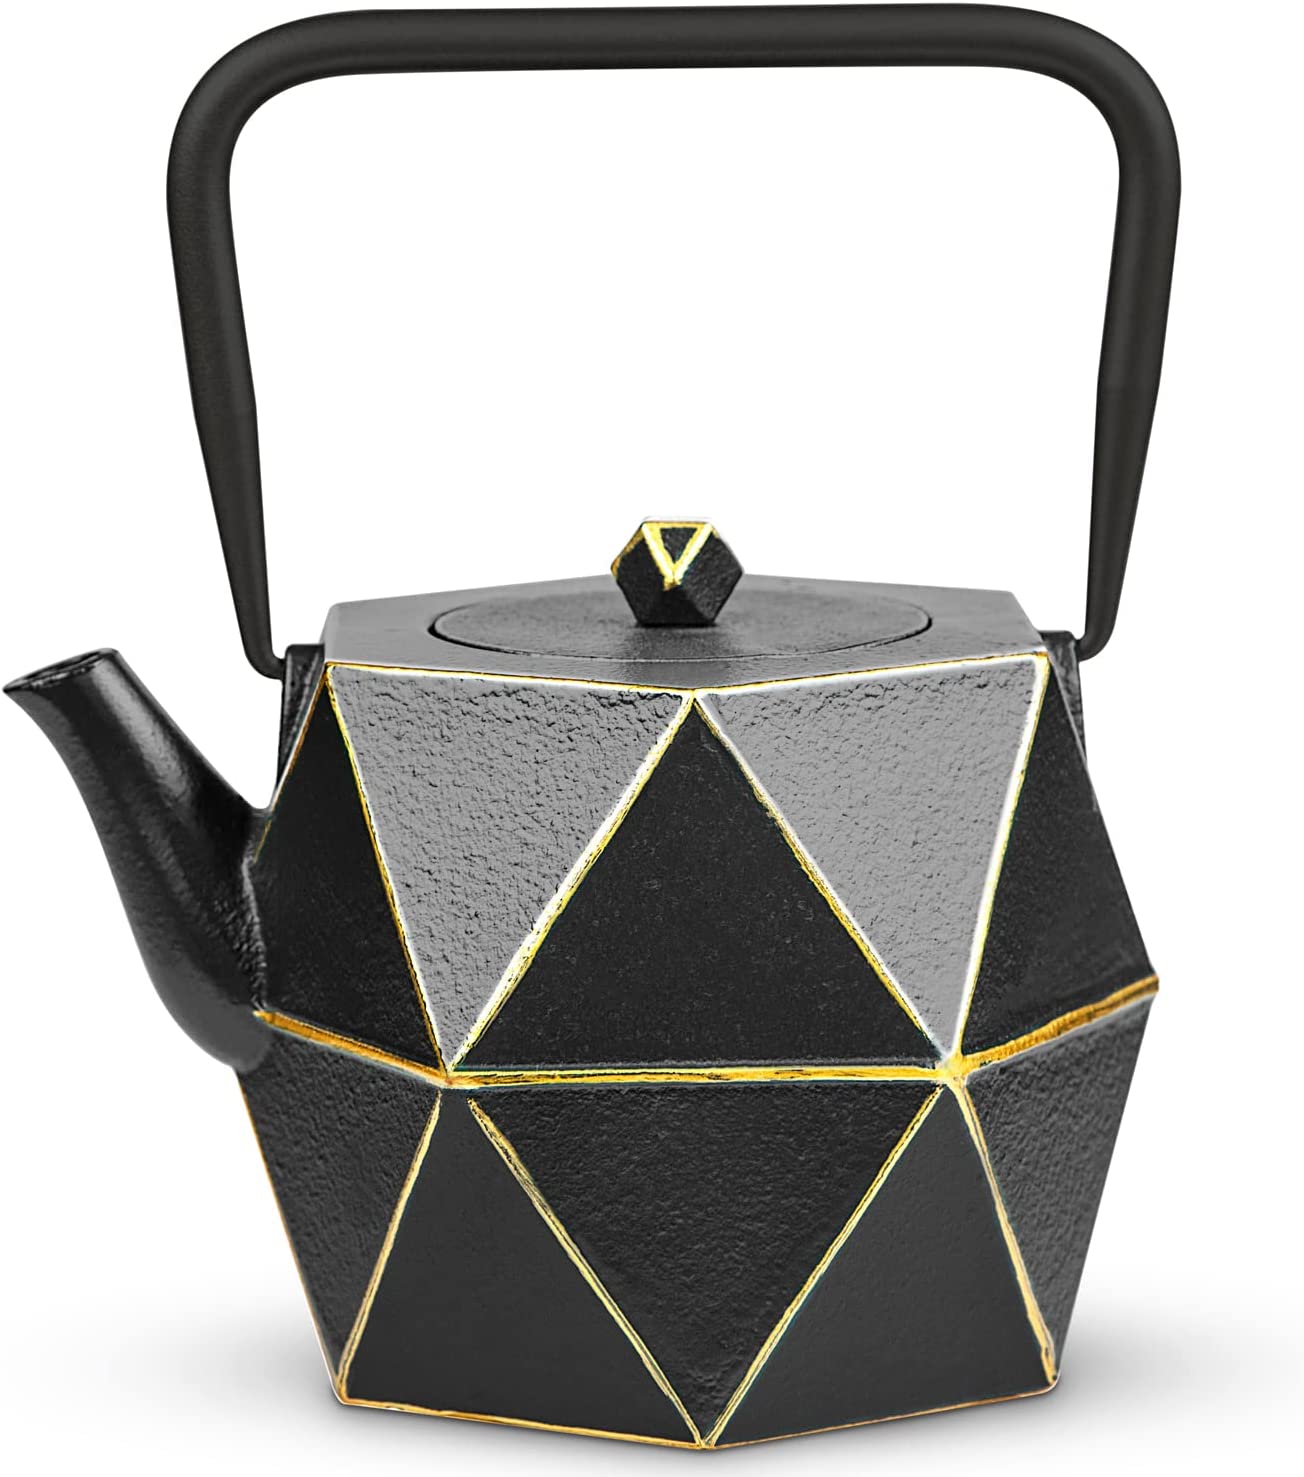 Toptier Cast Iron Teapot, Hob Safe Japanese Cast Iron Teapot Diamond Design with Removable Strainer for Loose Tea, 30 oz, Black